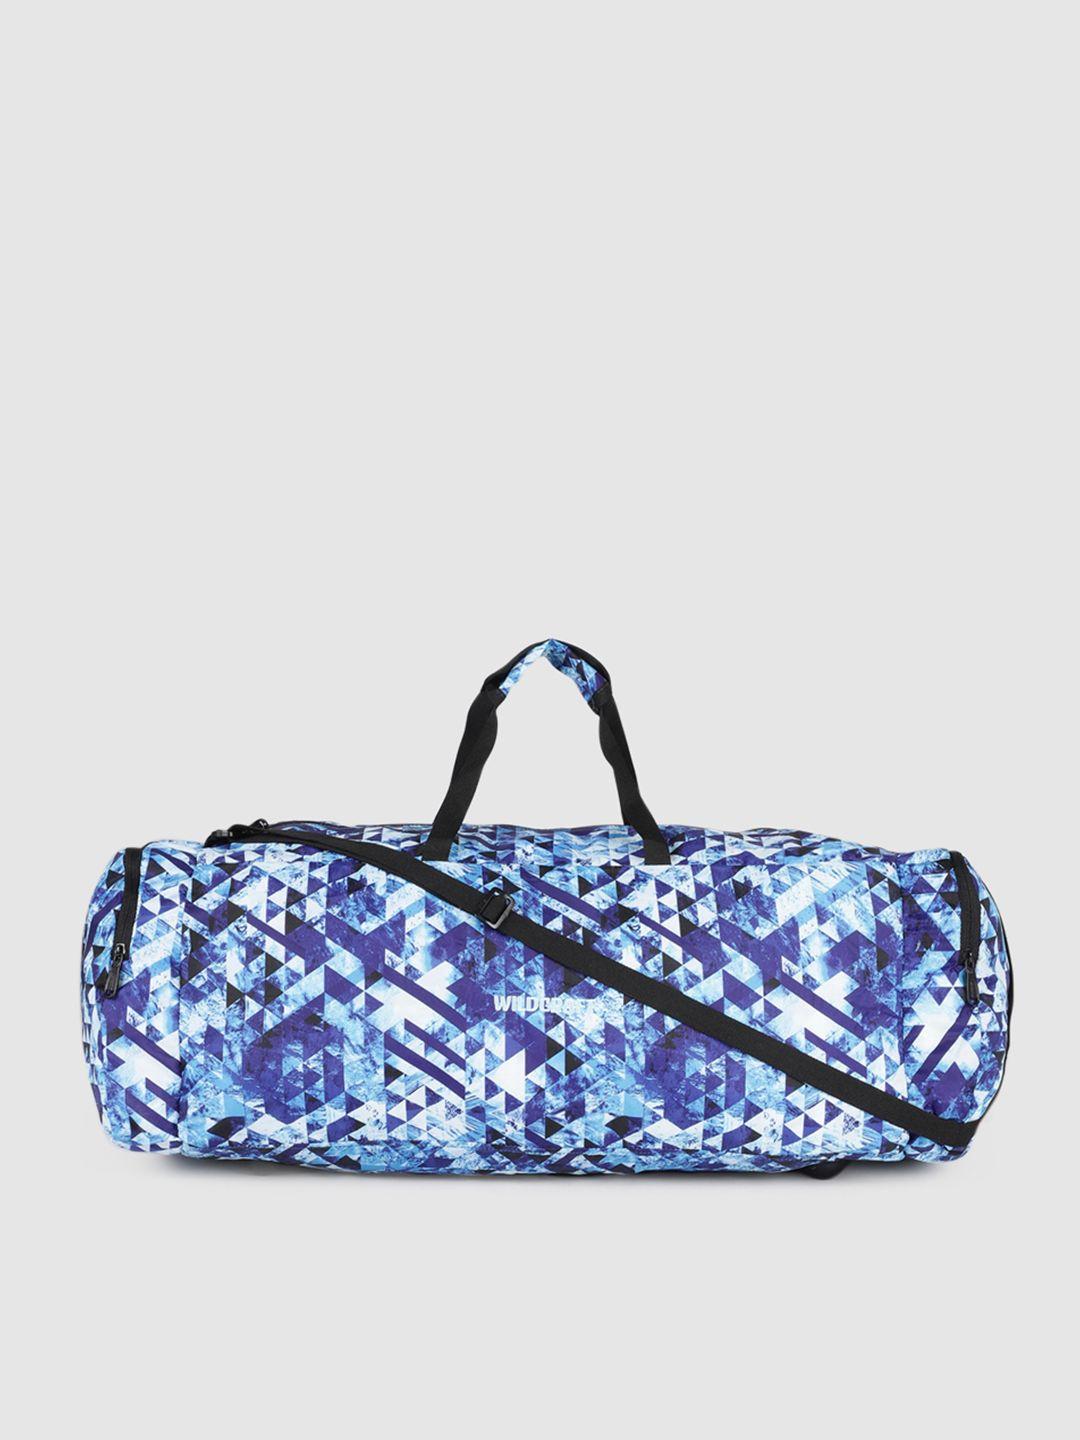 wildcraft unisex blue & white printed power duffel bag